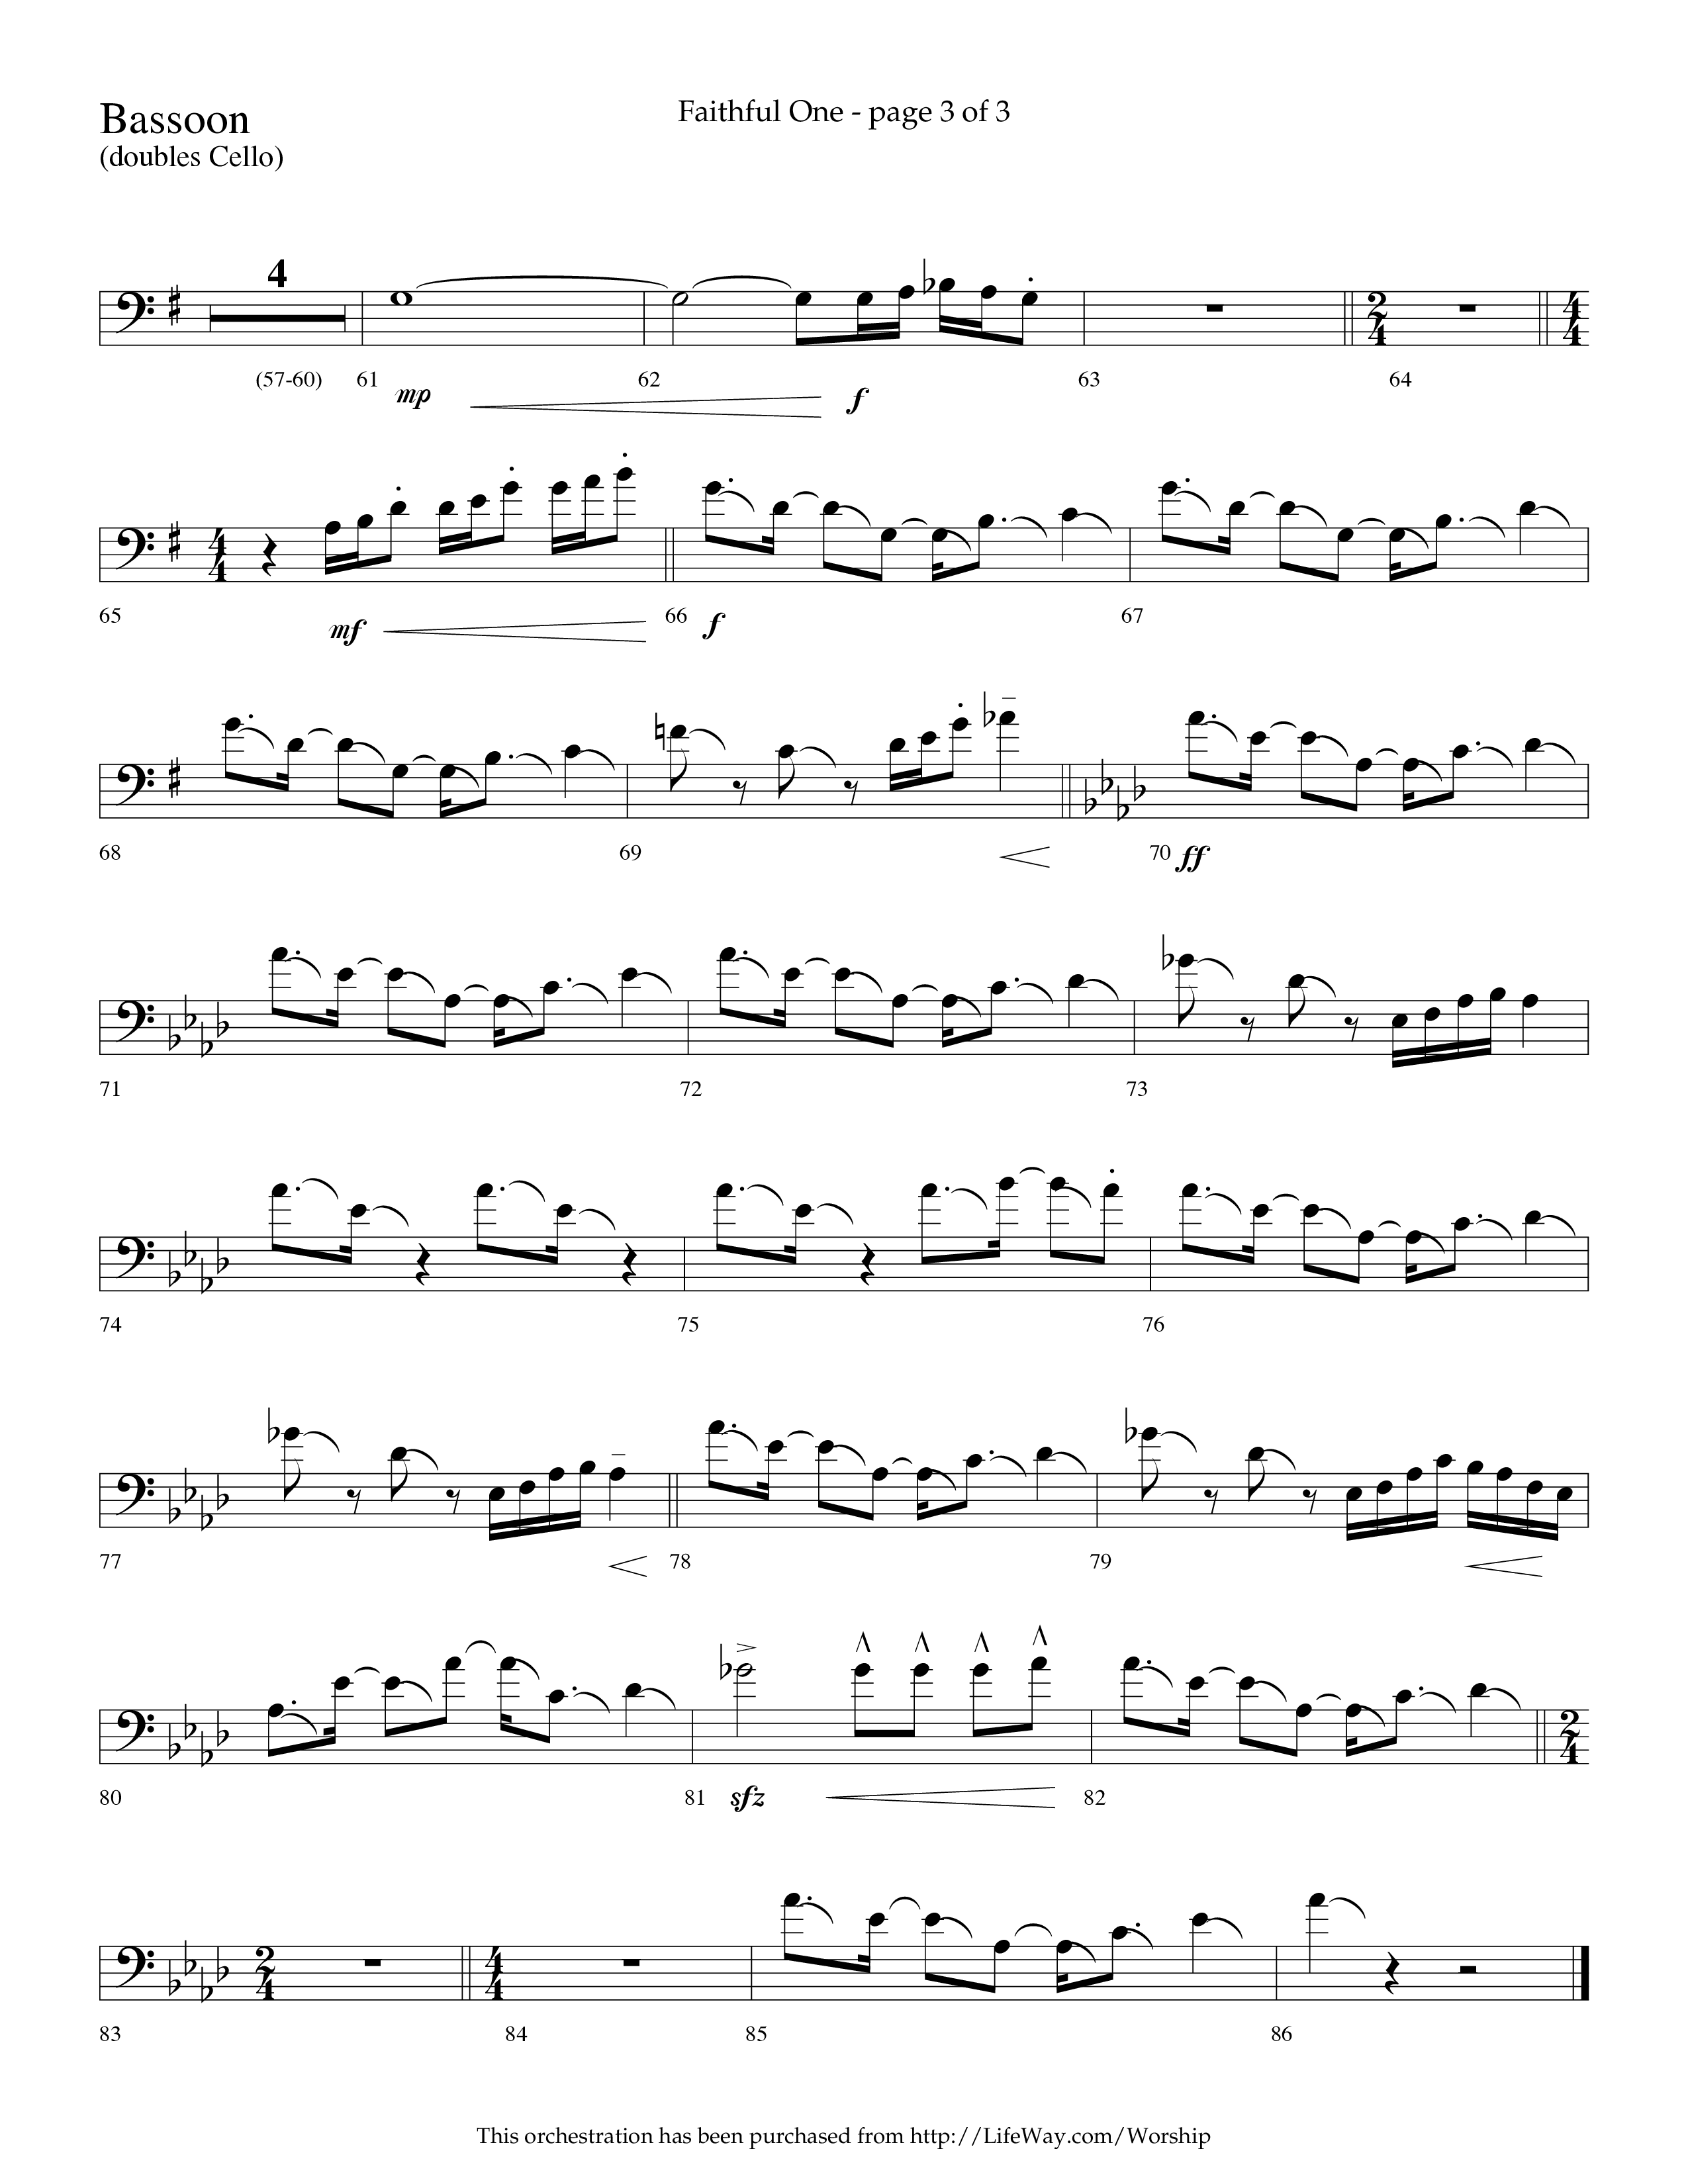 Faithful One (Choral Anthem SATB) Bassoon (Lifeway Choral / Arr. Cliff Duren)